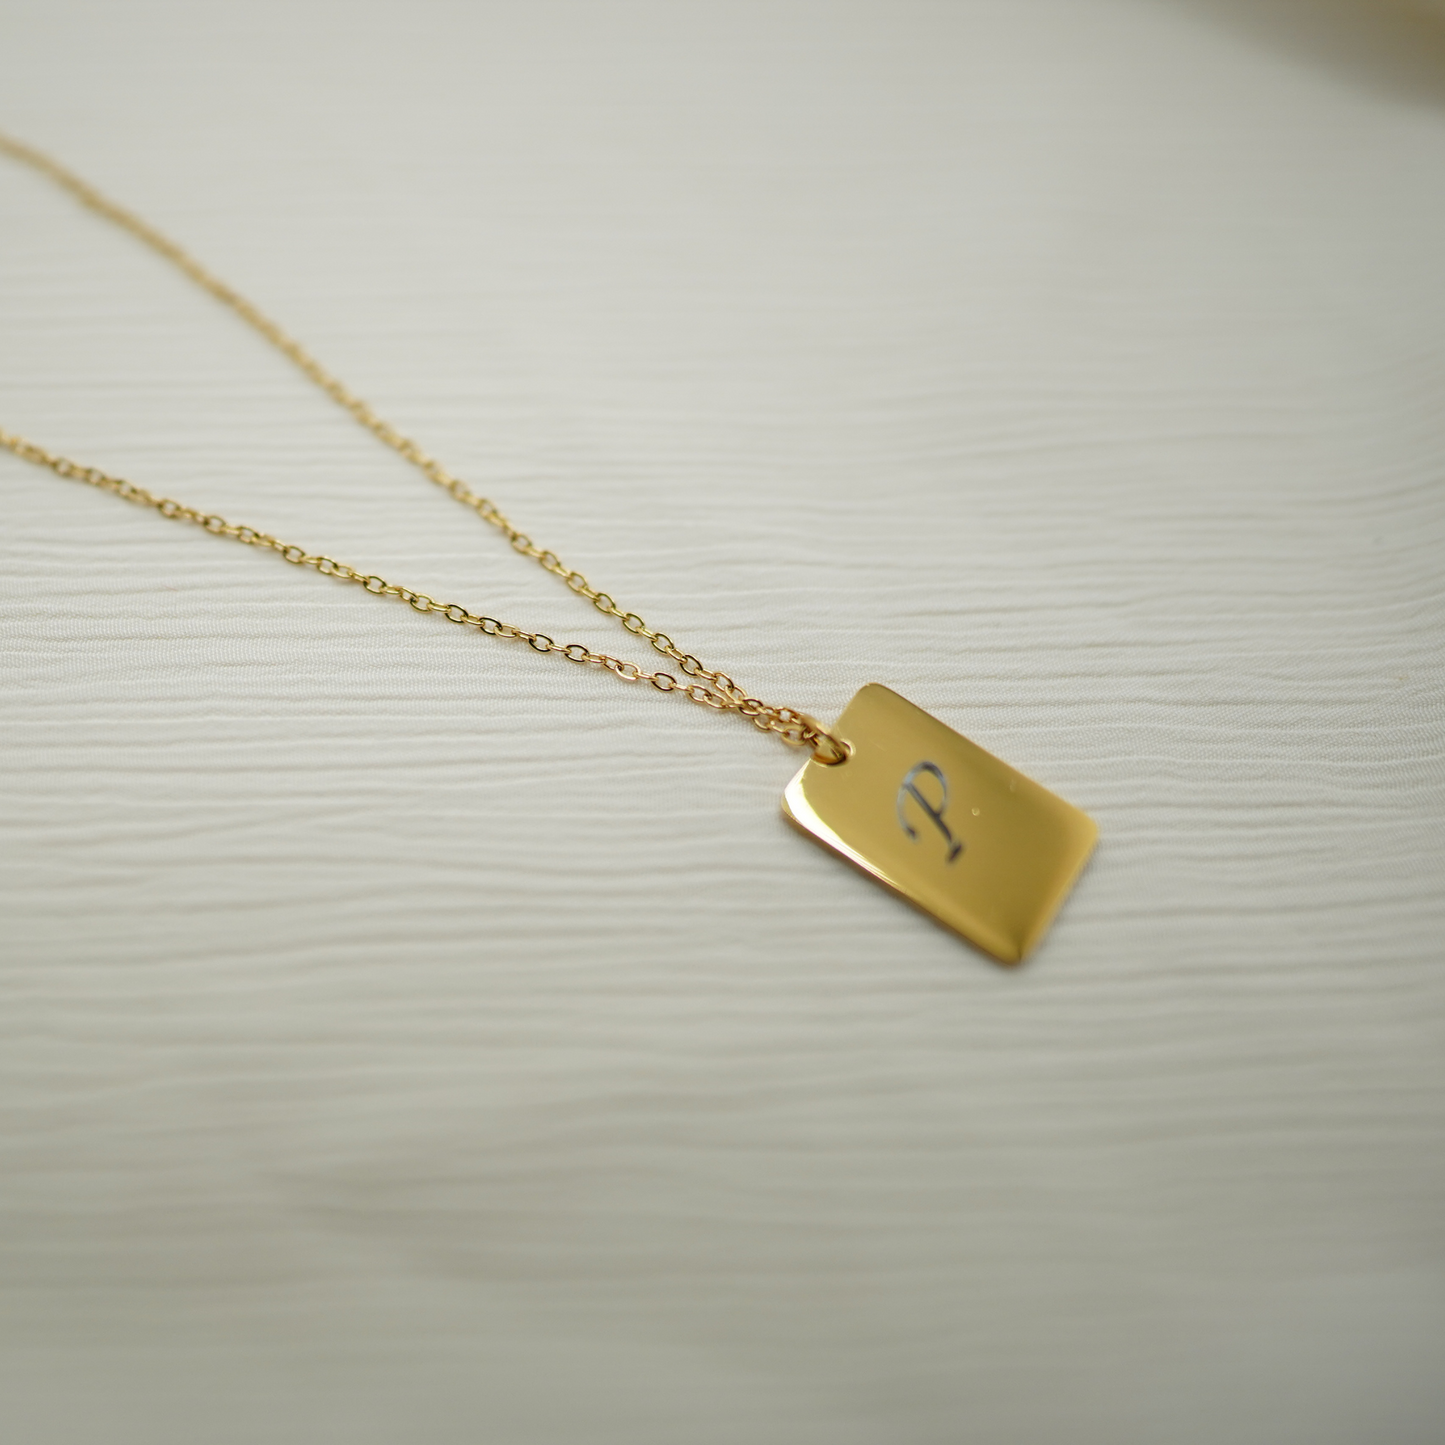 Personalized (15mm x 22mm) 18K Gold Vermeil Bar Pendant Necklace